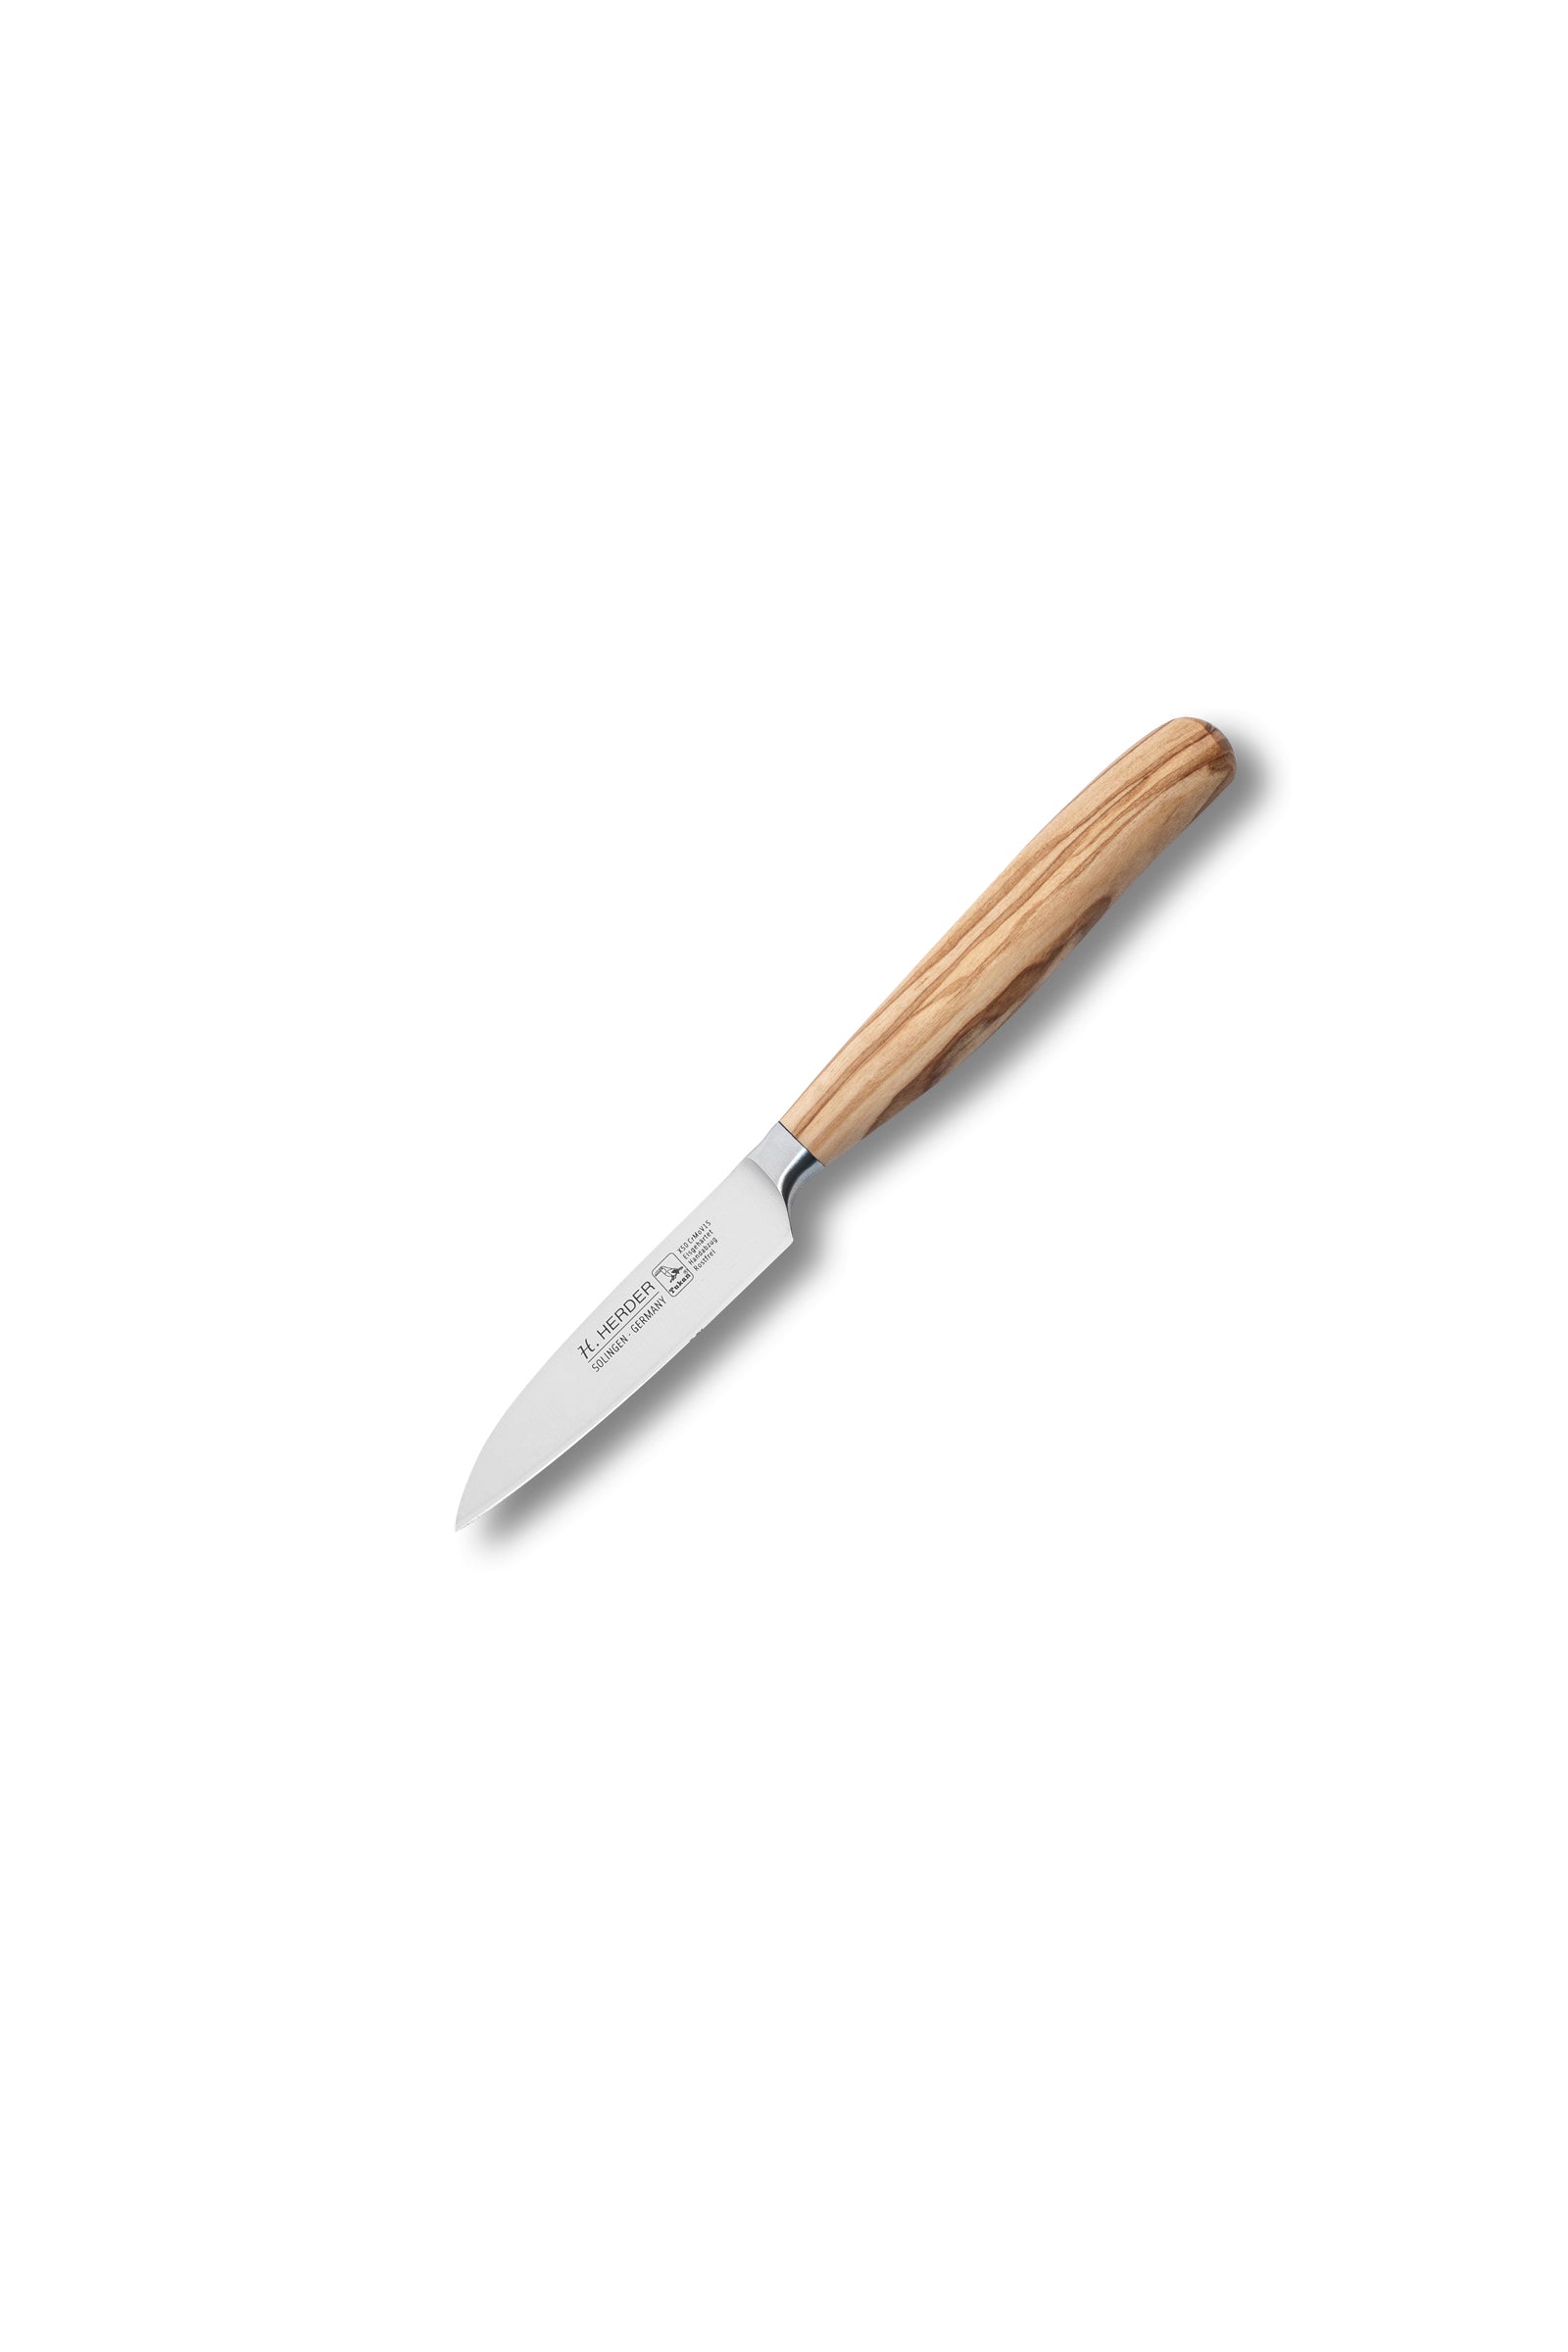 Paring knife Eterno, olive wood, blade length 9cm, forged